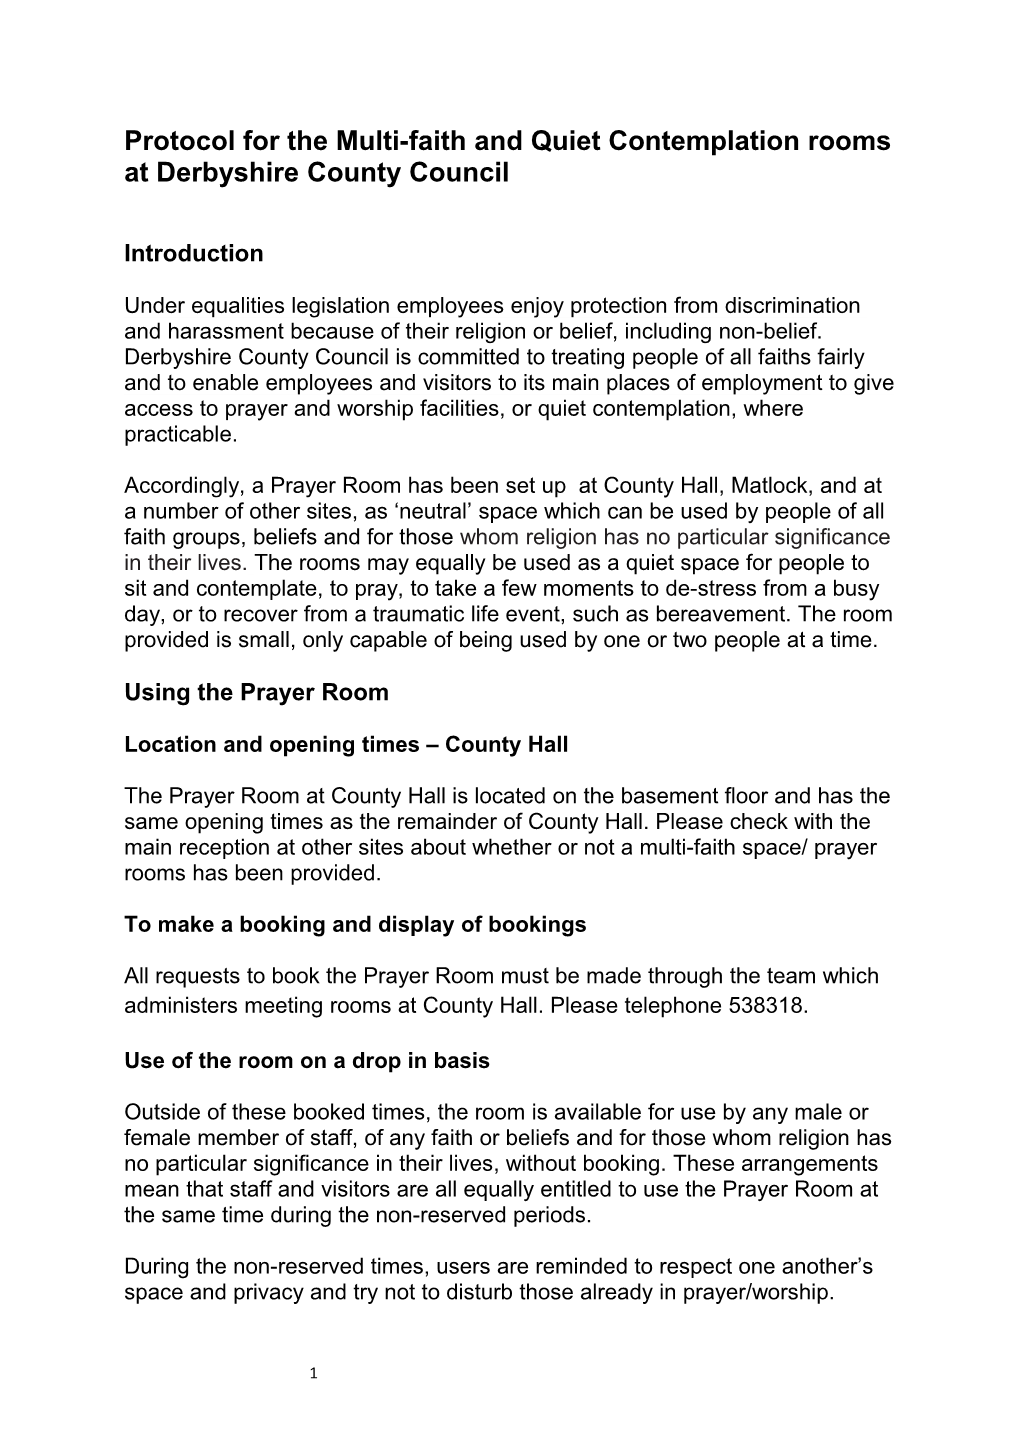 Prayer Room Protocol